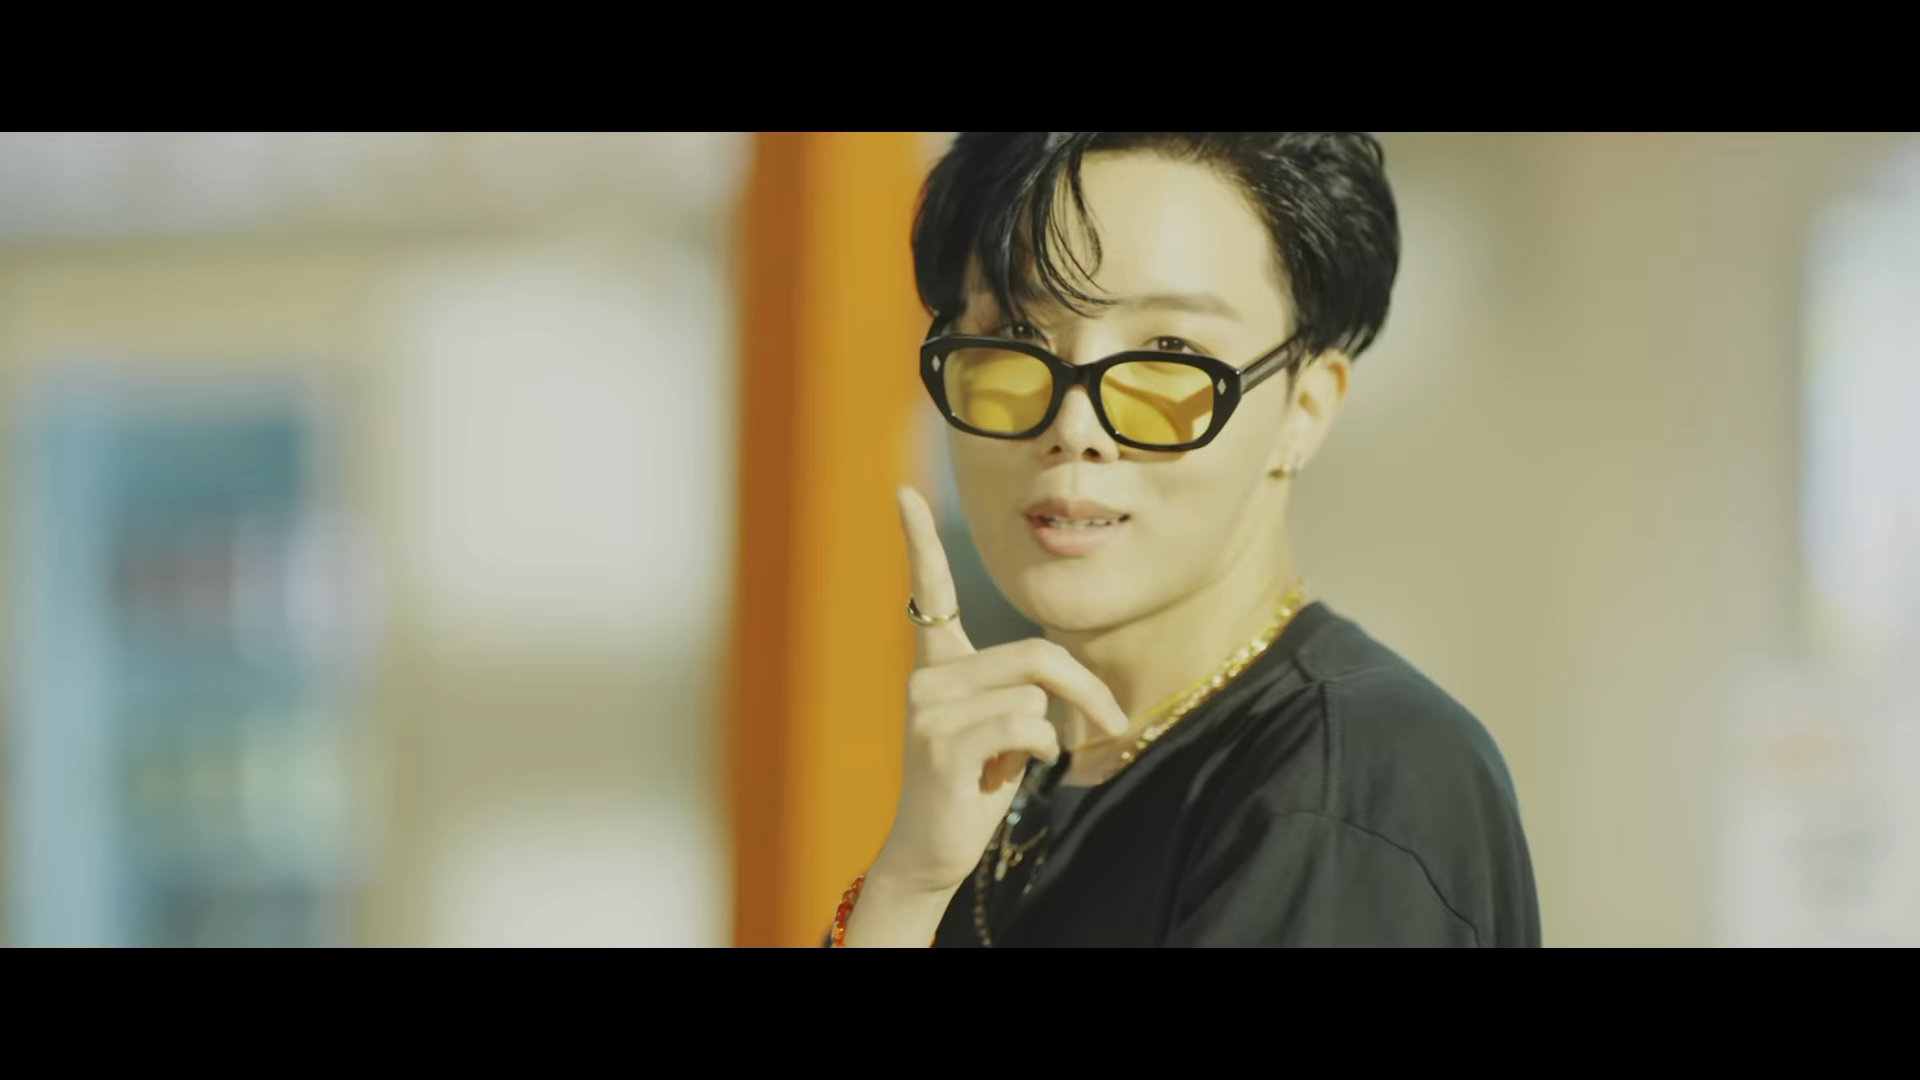 BTS Dynamite MV Teaser Screencaps (HQ) - K-Pop Database / dbkpop.com